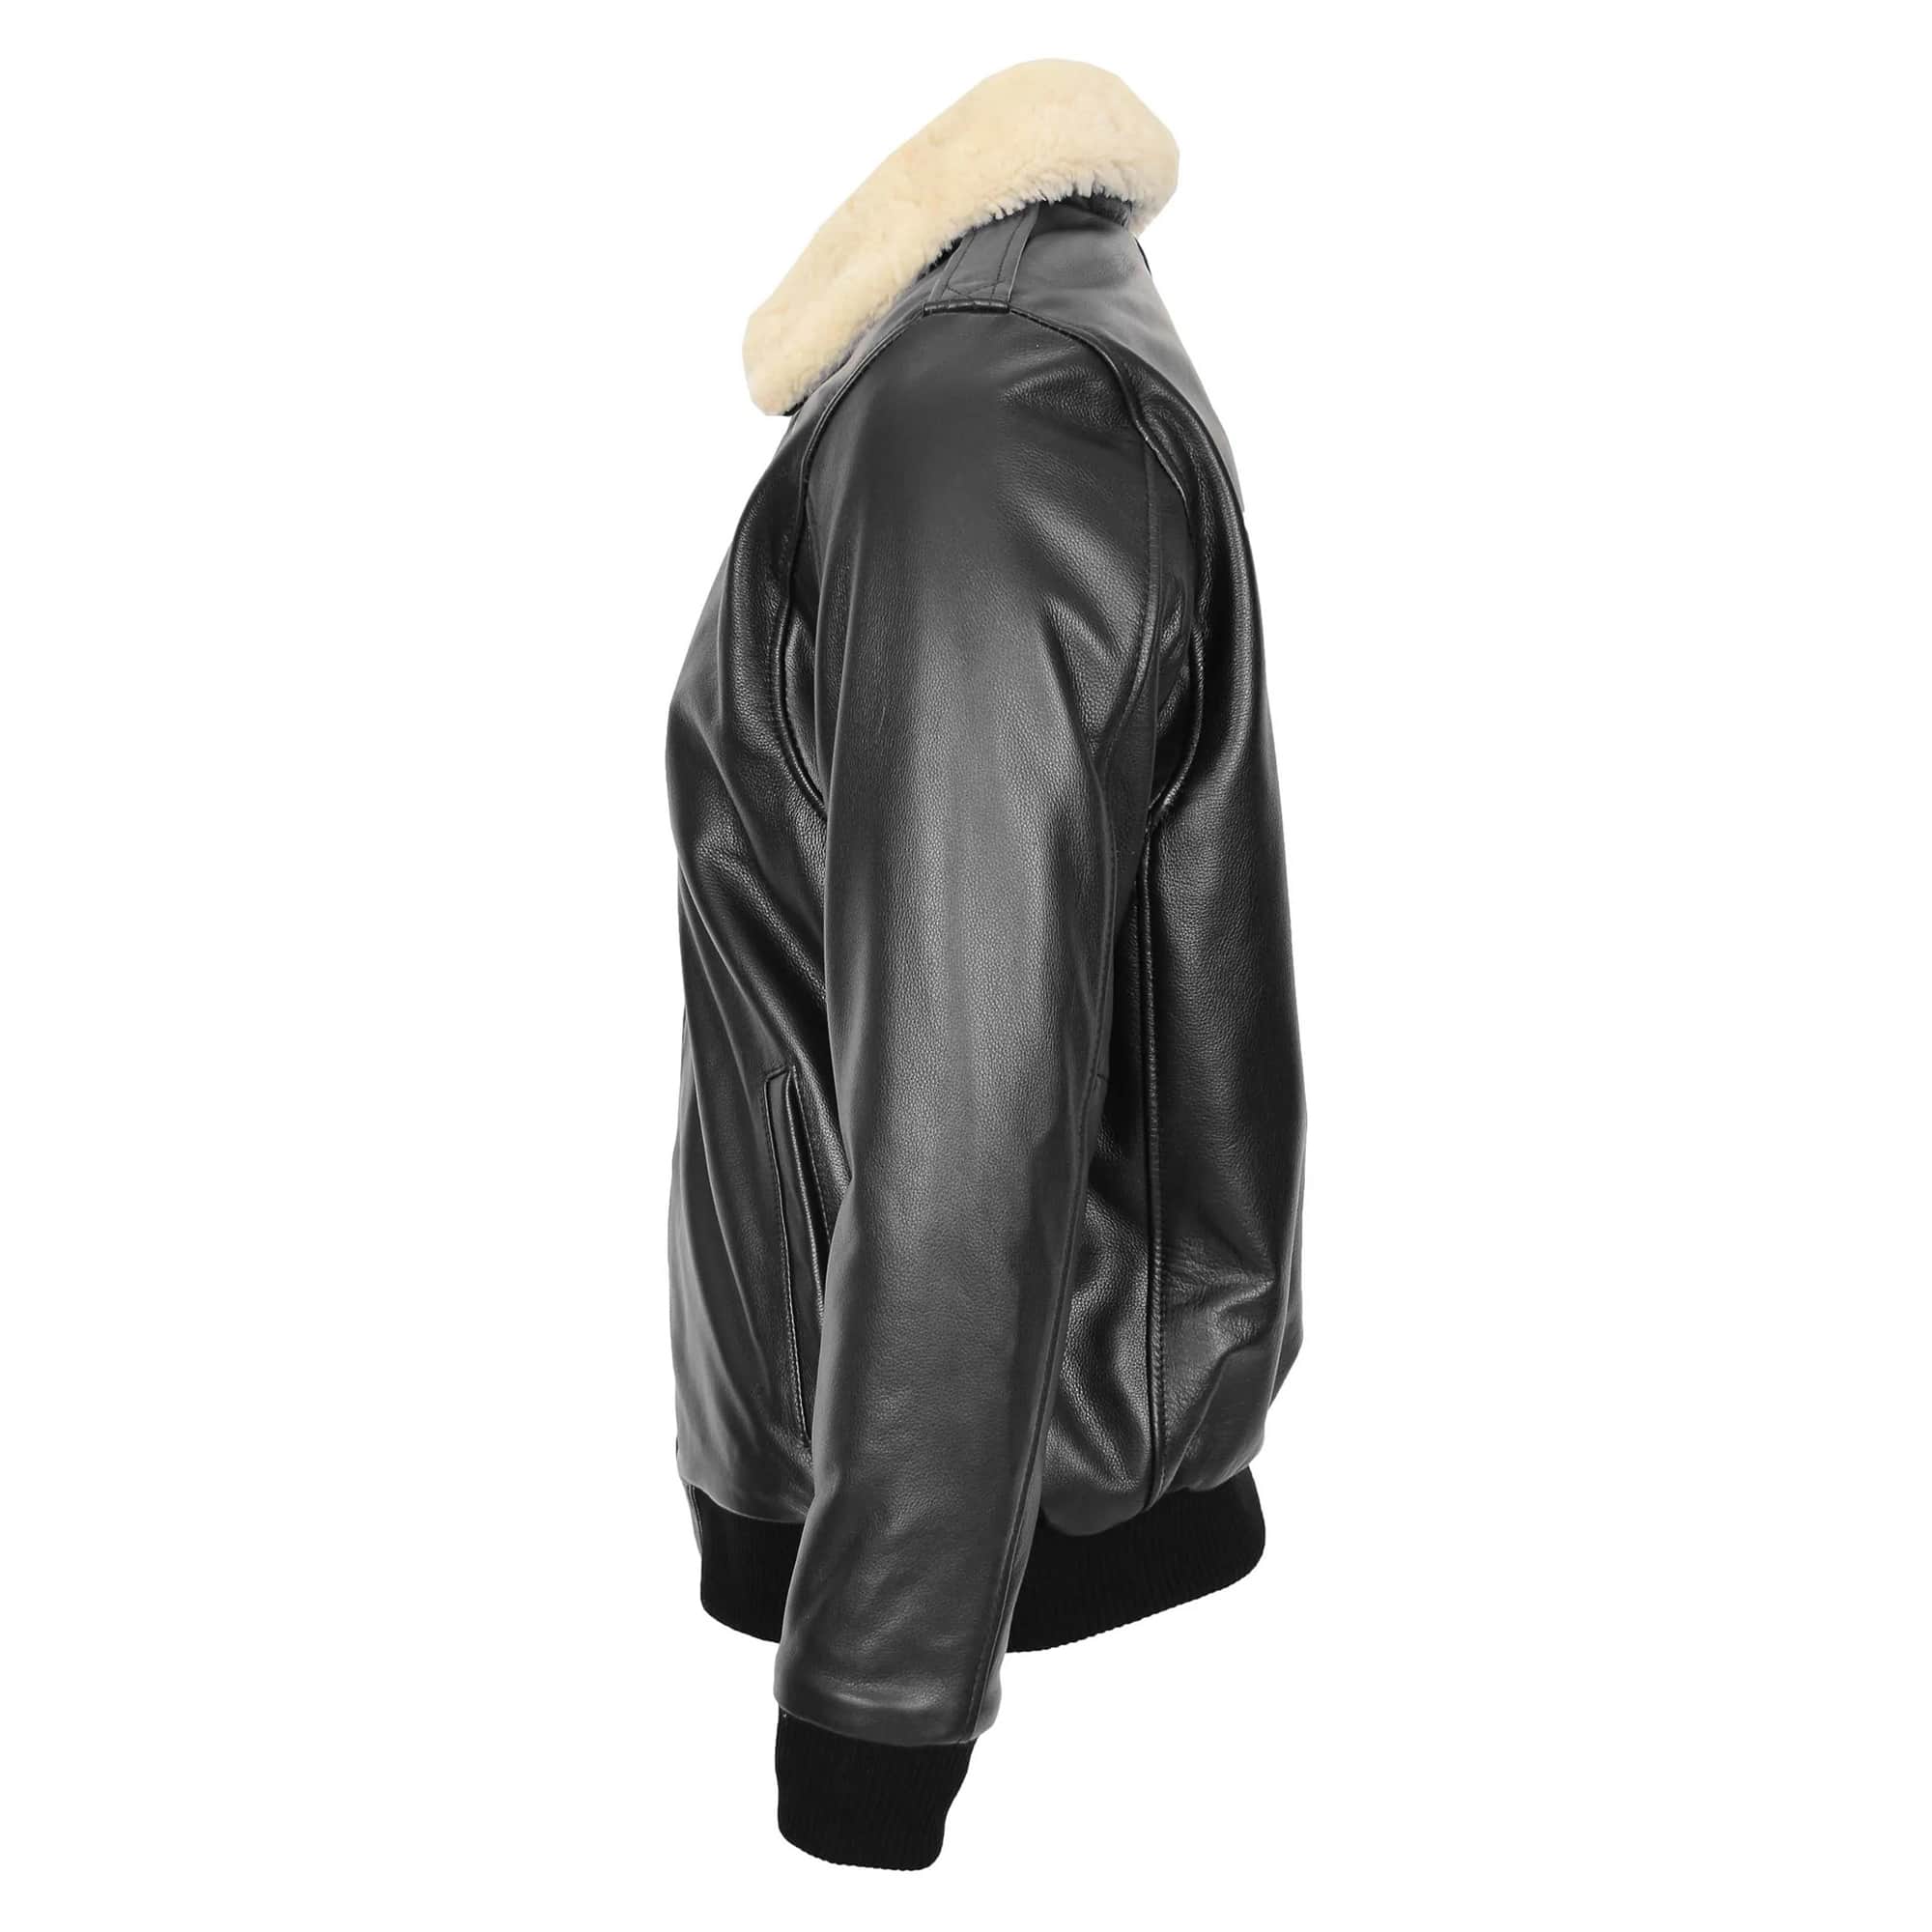 Bomber Leather Jacket For Men with Sheepskin Collar Viggo Black